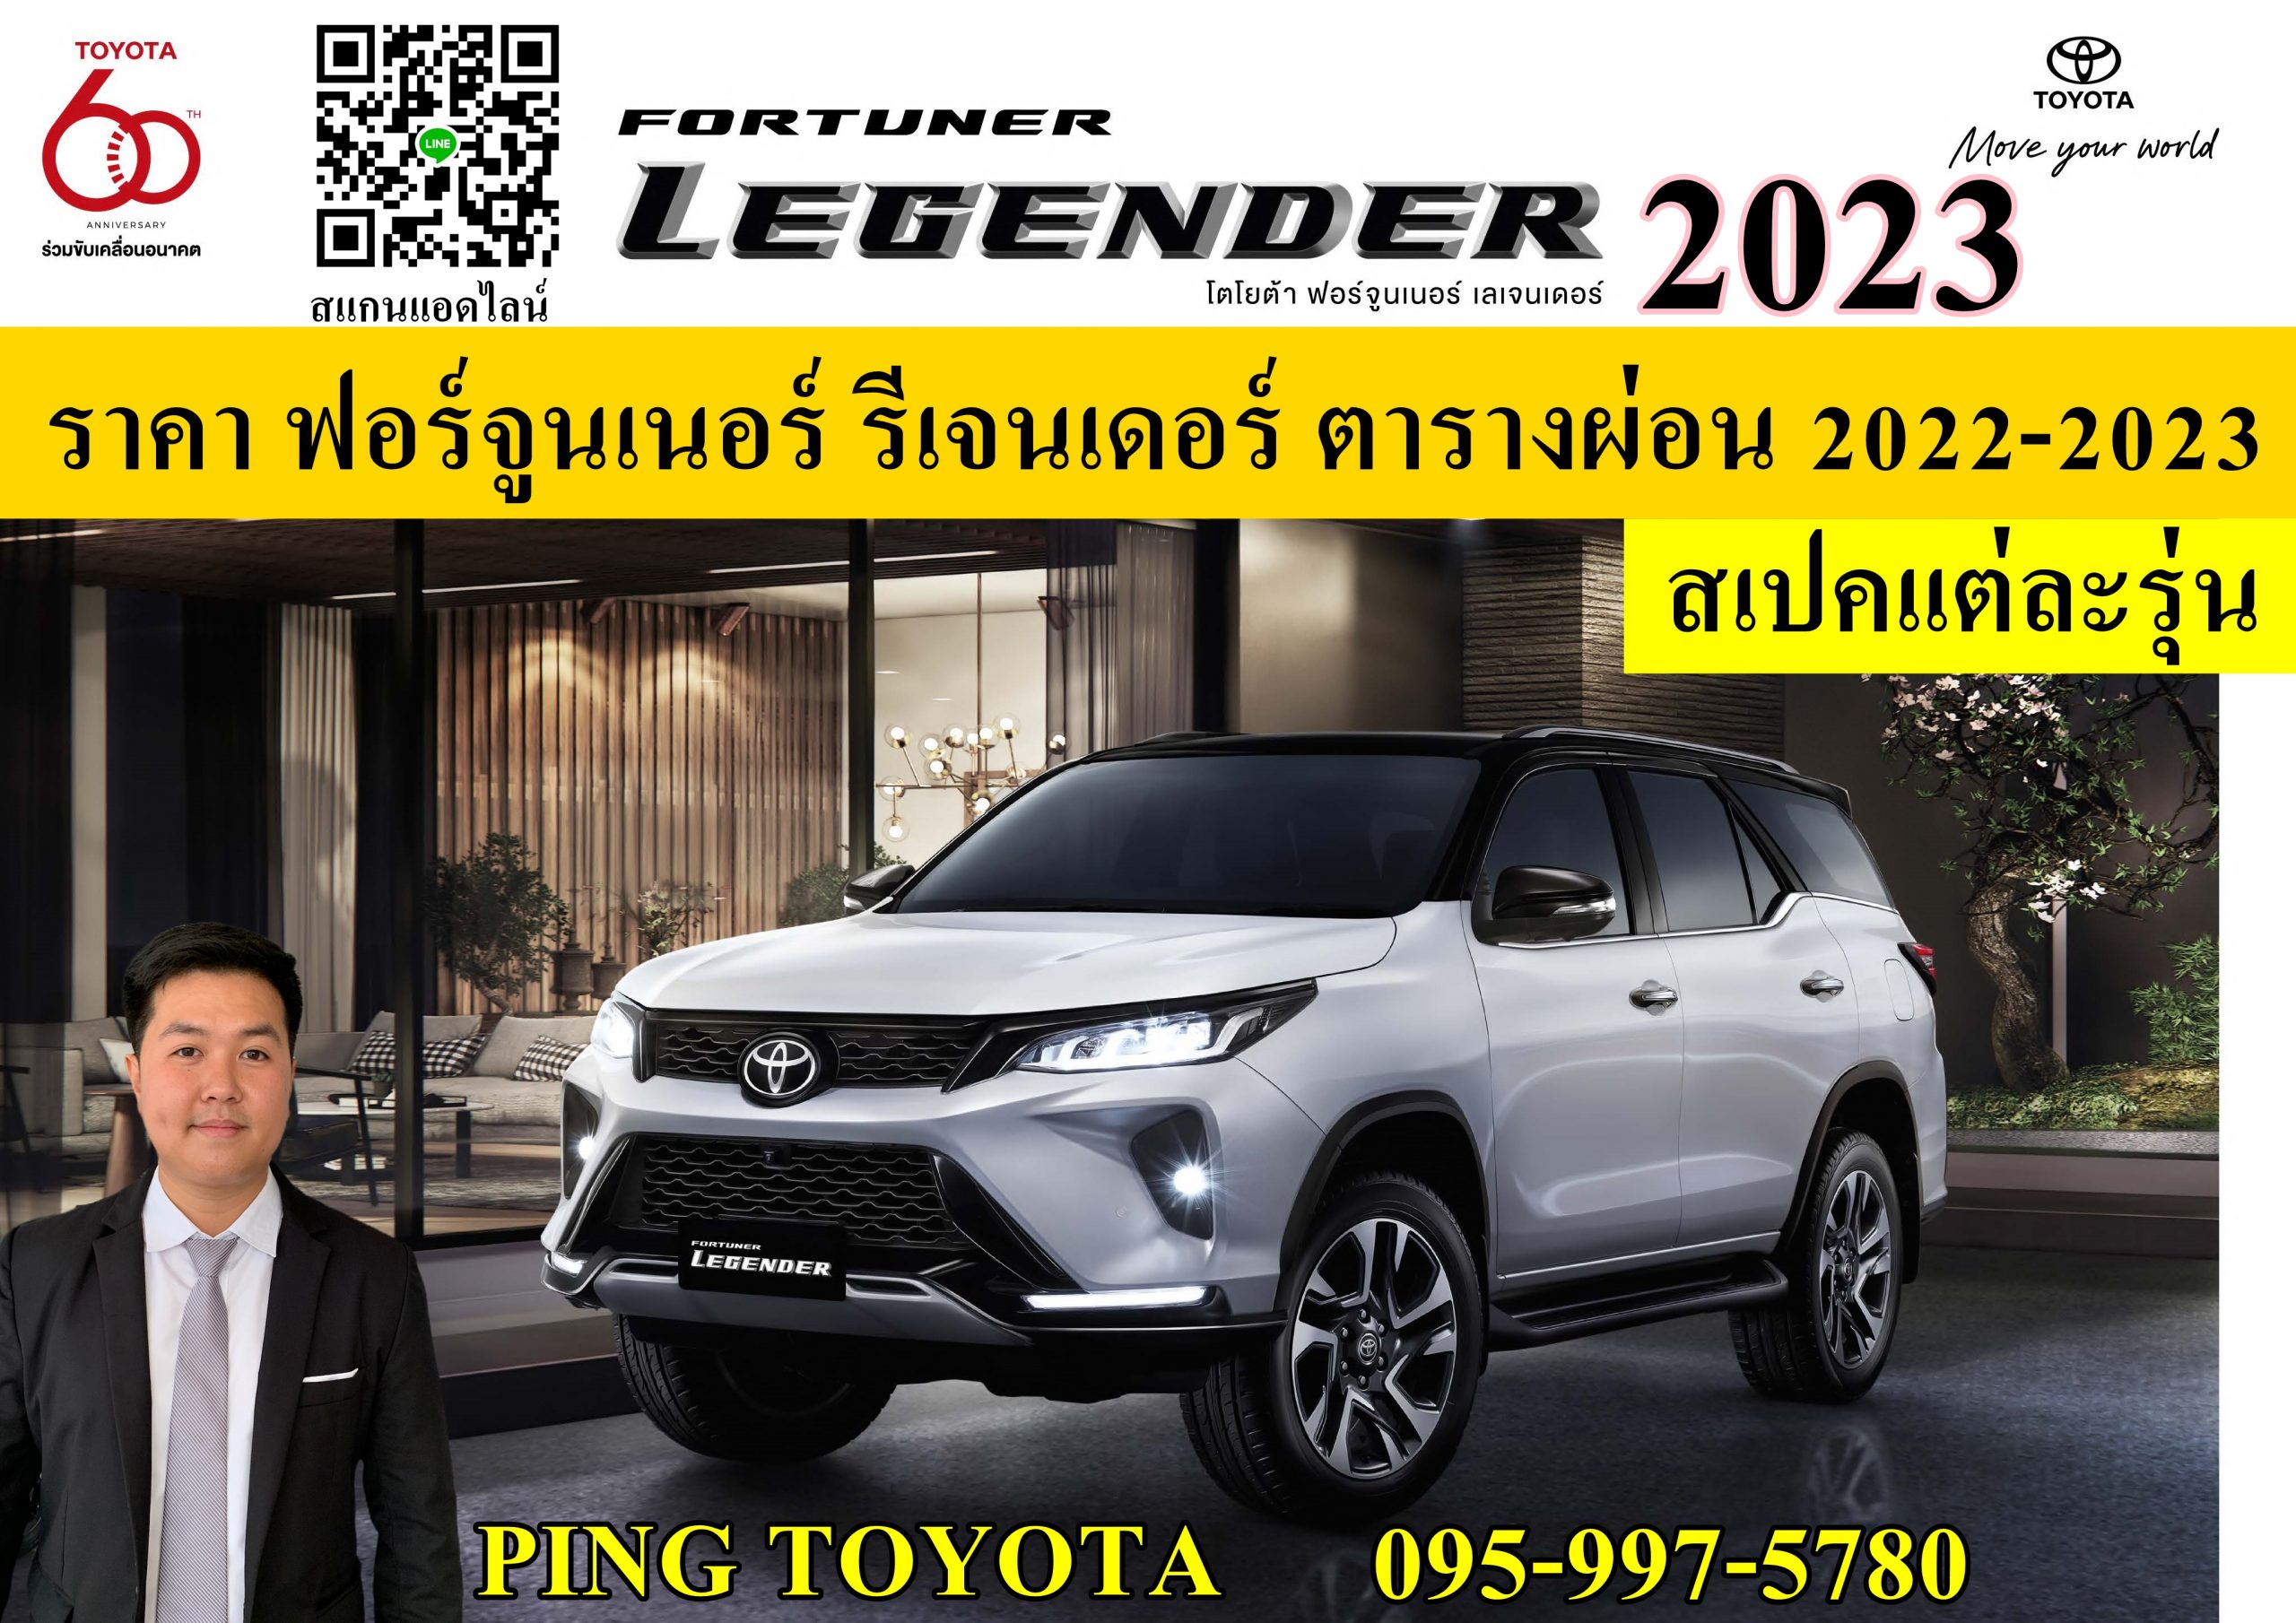 Toyota New Fortuner Legender 2022-2023 ราคา ตาราง เงินดาวน์ ผ่อน ค่างวด โตโยต้า ฟอร์จูนเนอร์ รีเจนเดอร์ รุ่นใหม่ล่าสุดป้ายเเดง